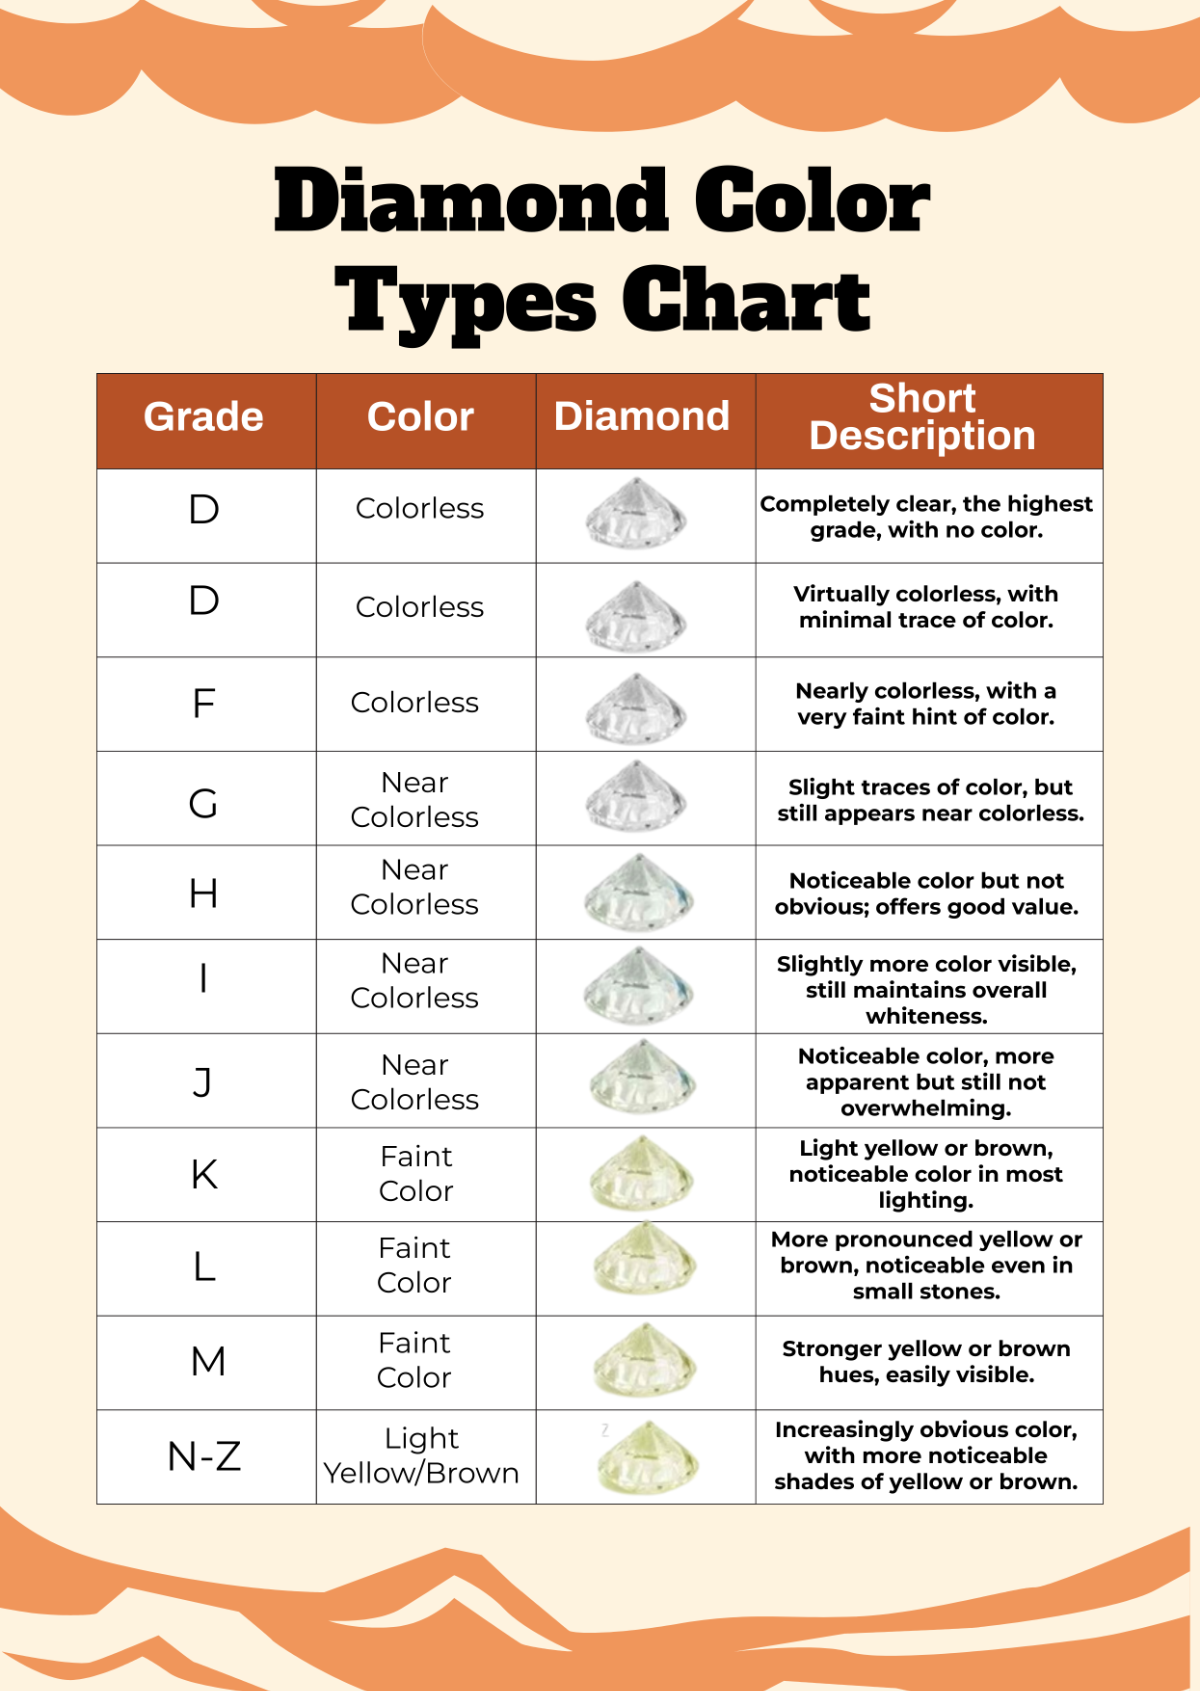 Diamond Color Types Chart